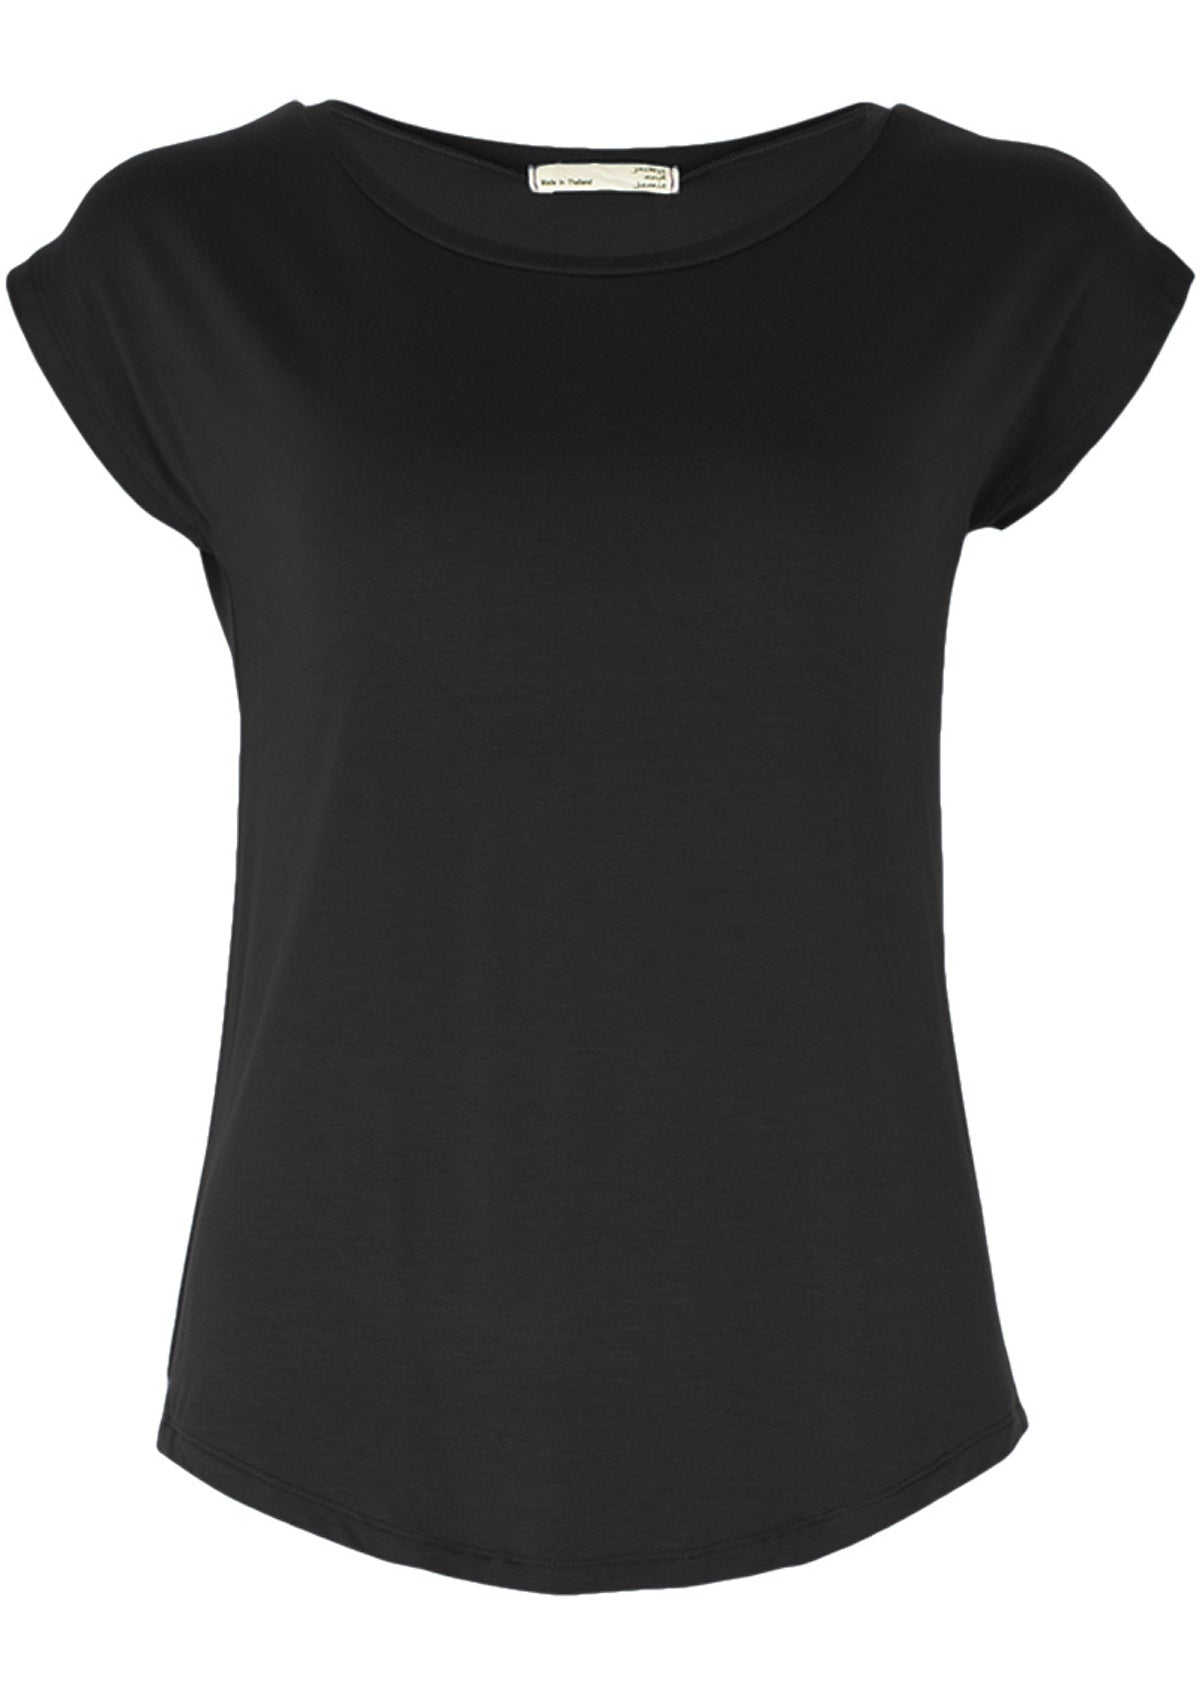 Women's basic rayon black t-shirt.